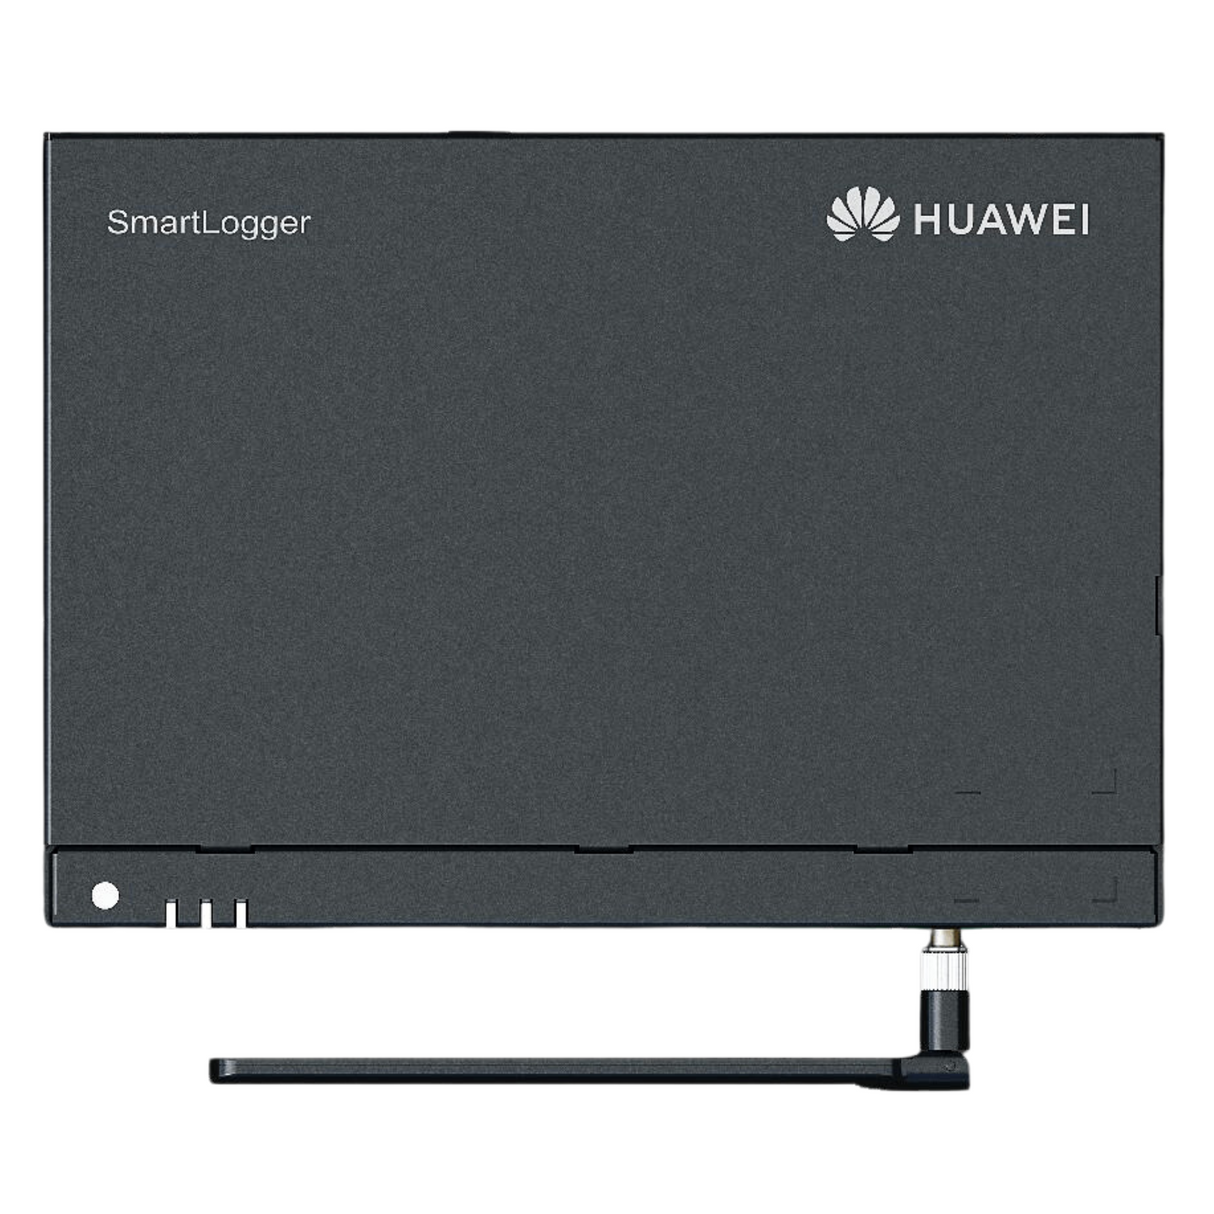 HUAWEI SmartLogger3000A01EU (without MBUS)